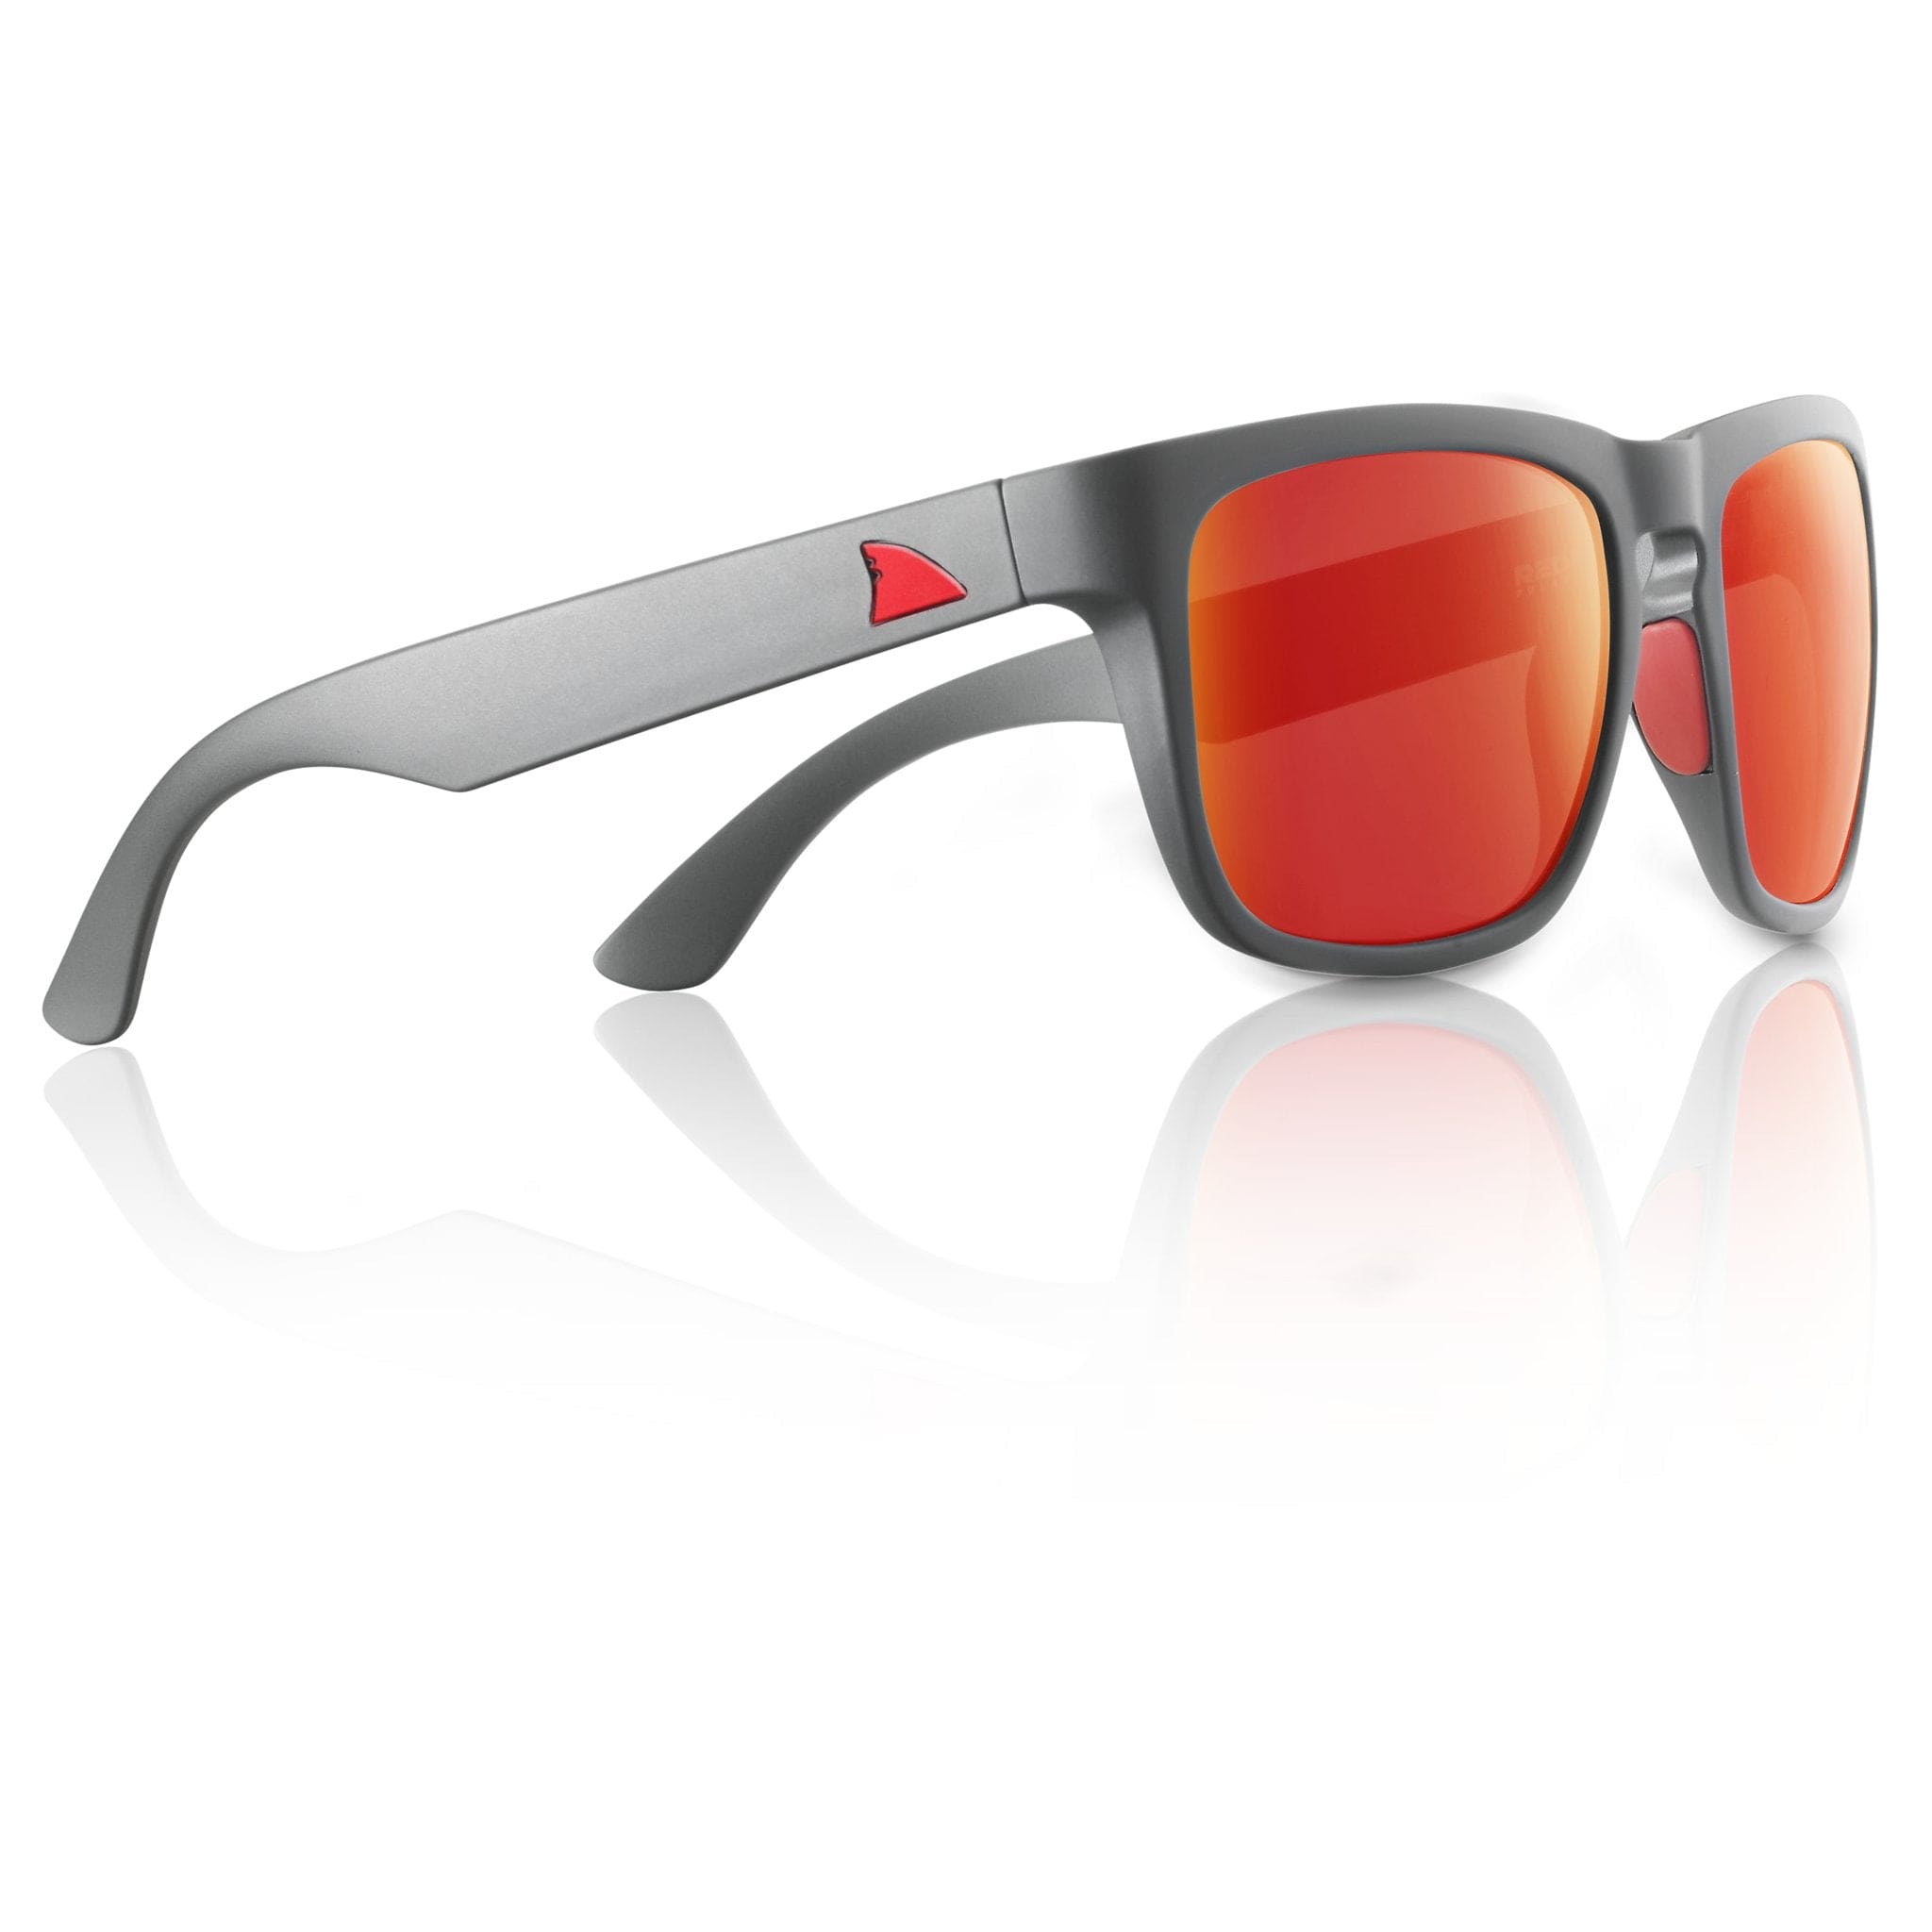 Redfin Wassaw Polarized Fishing Sunglasses